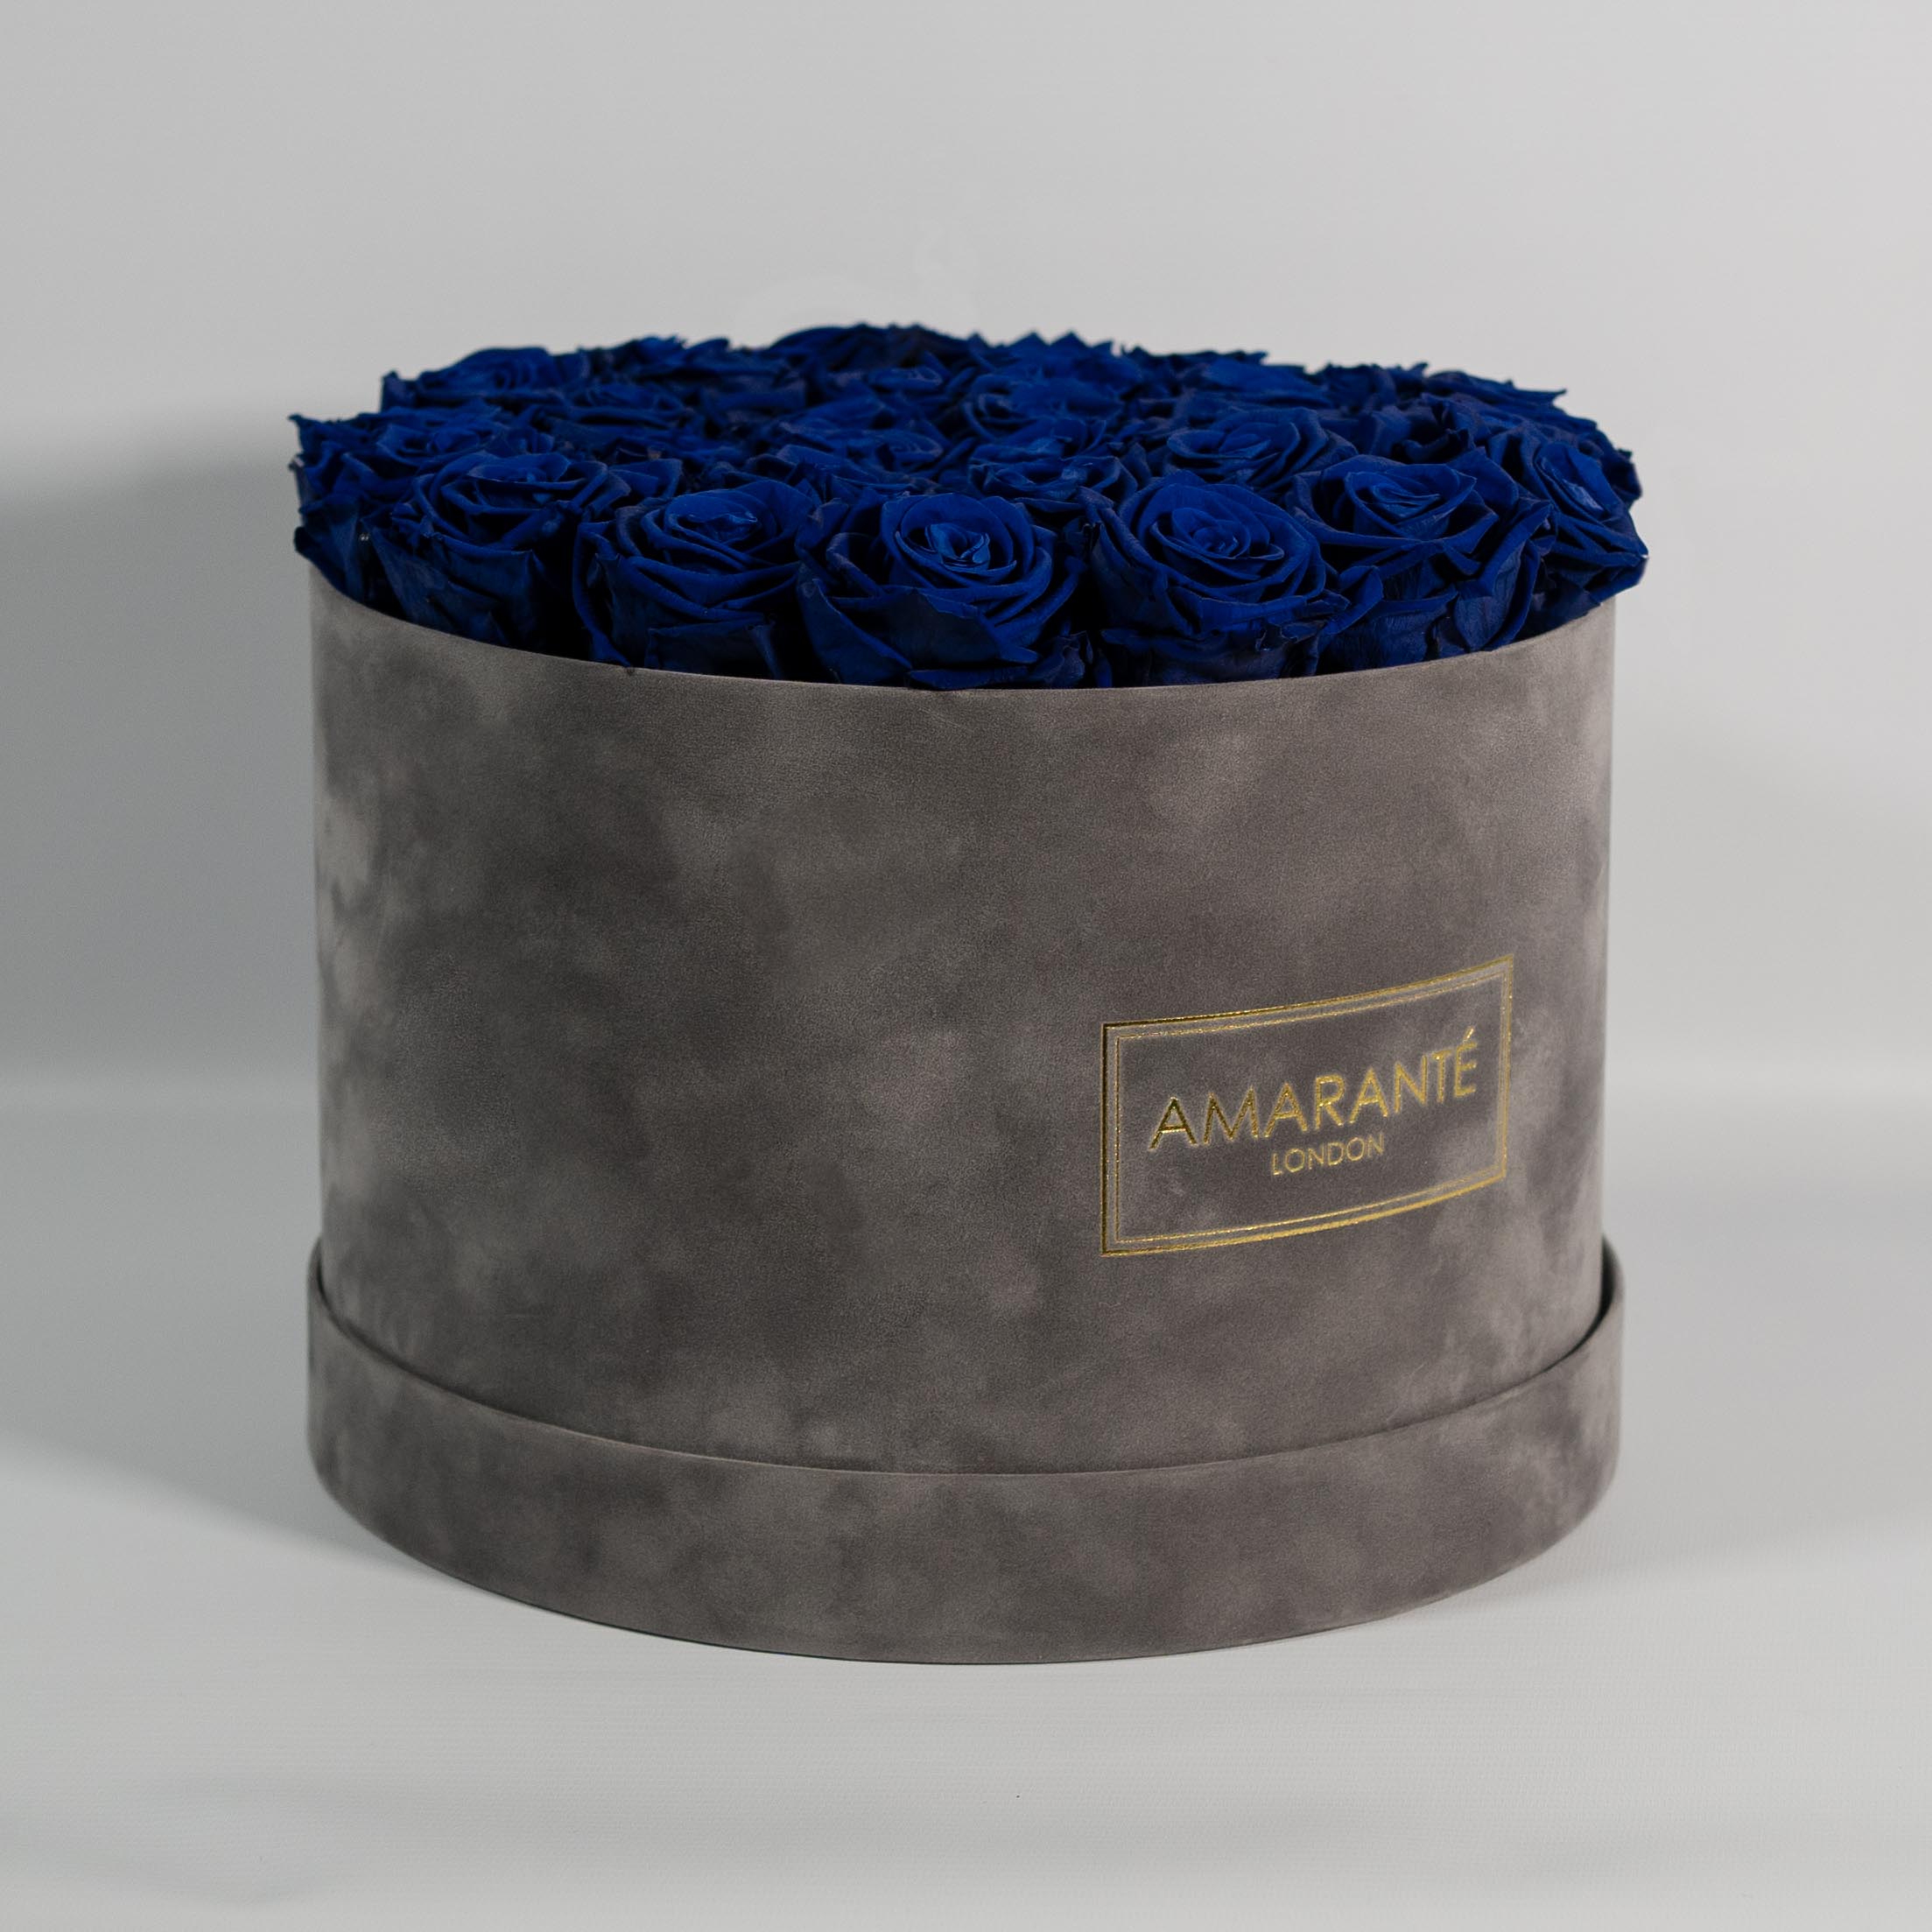 Stunning Royal blue Roses, denoting good health, luck, and healing. 